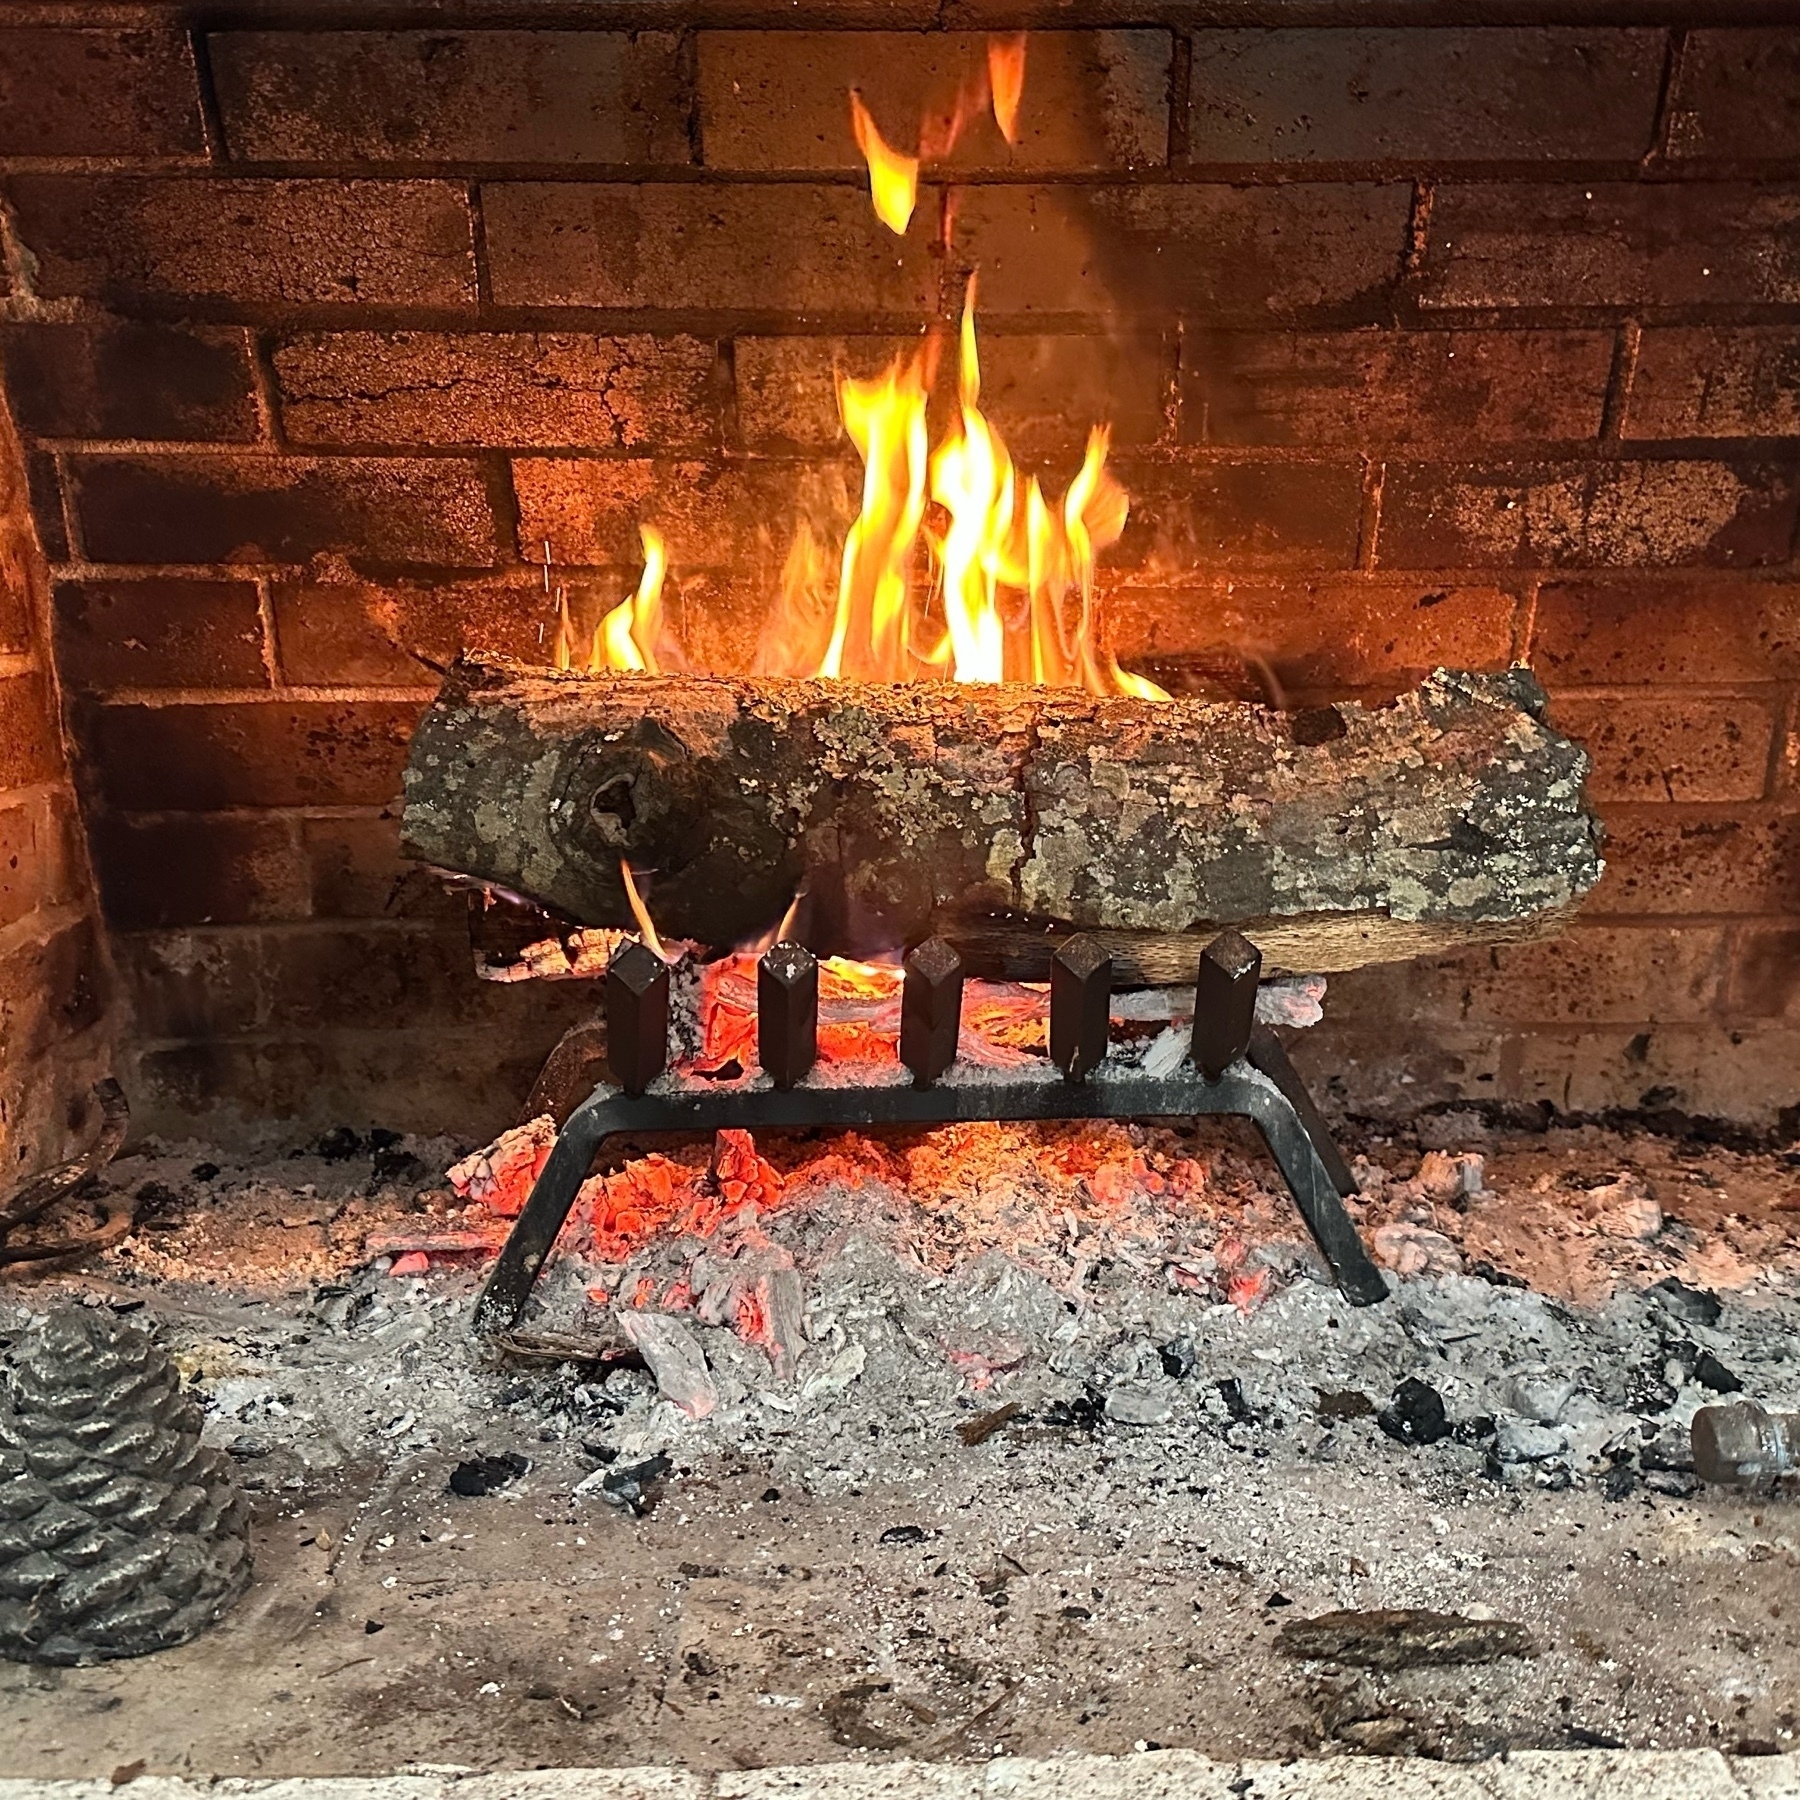 Fire in a masonry fireplace